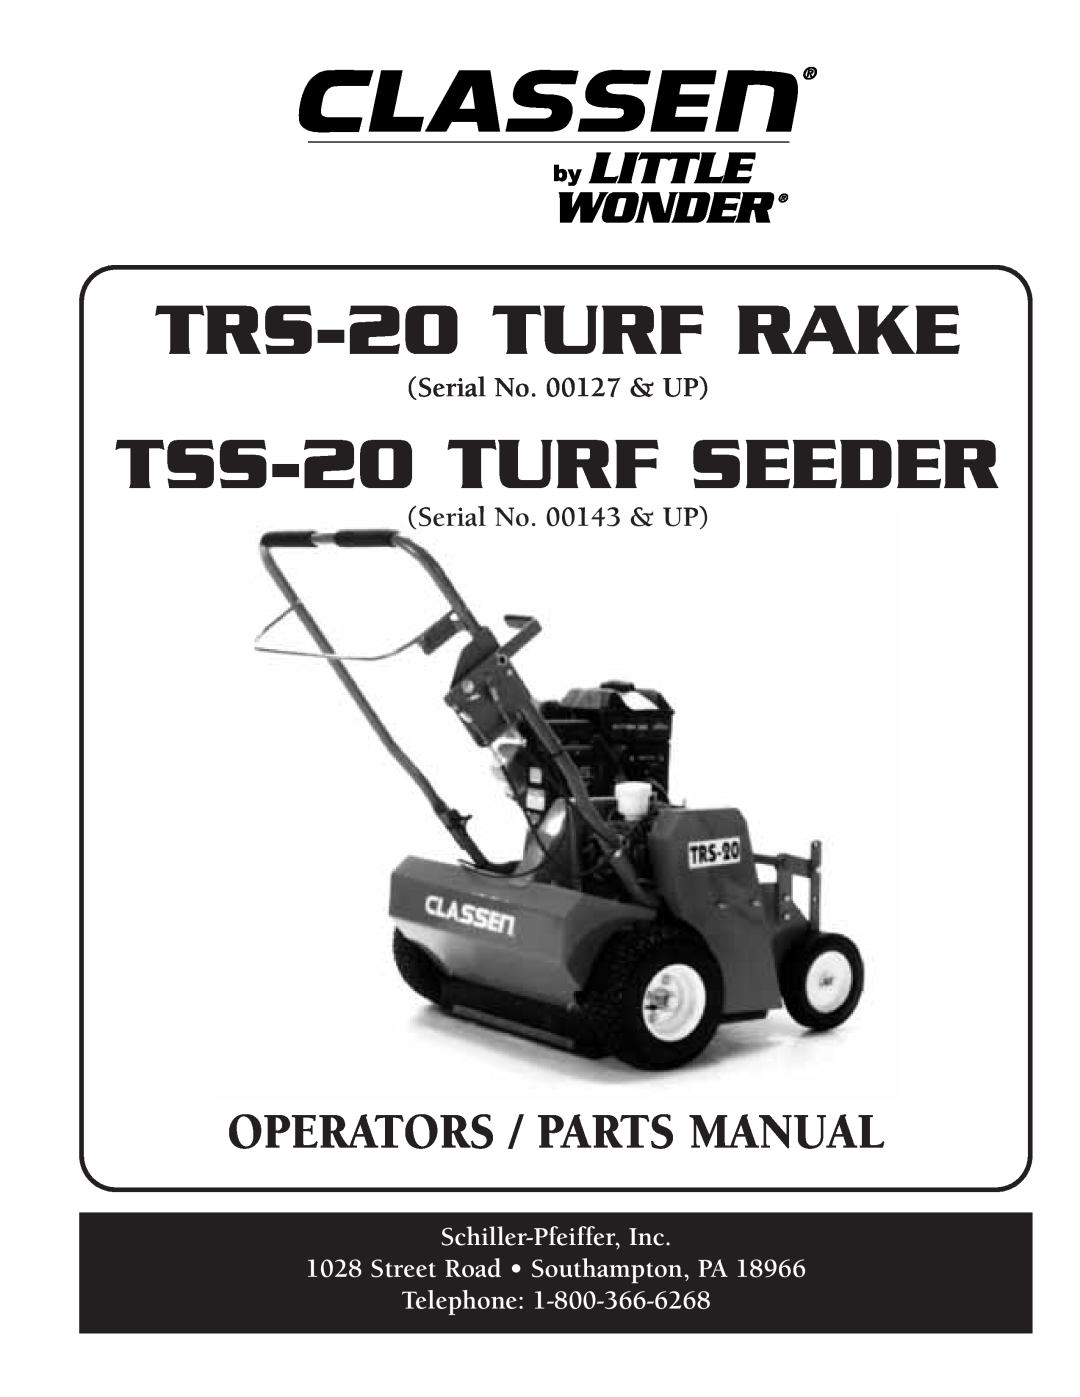 Little Wonder manual Serial No. 00127 & UP, Serial No. 00143 & UP, TRS-20TURF RAKE, TSS-20TURF SEEDER 